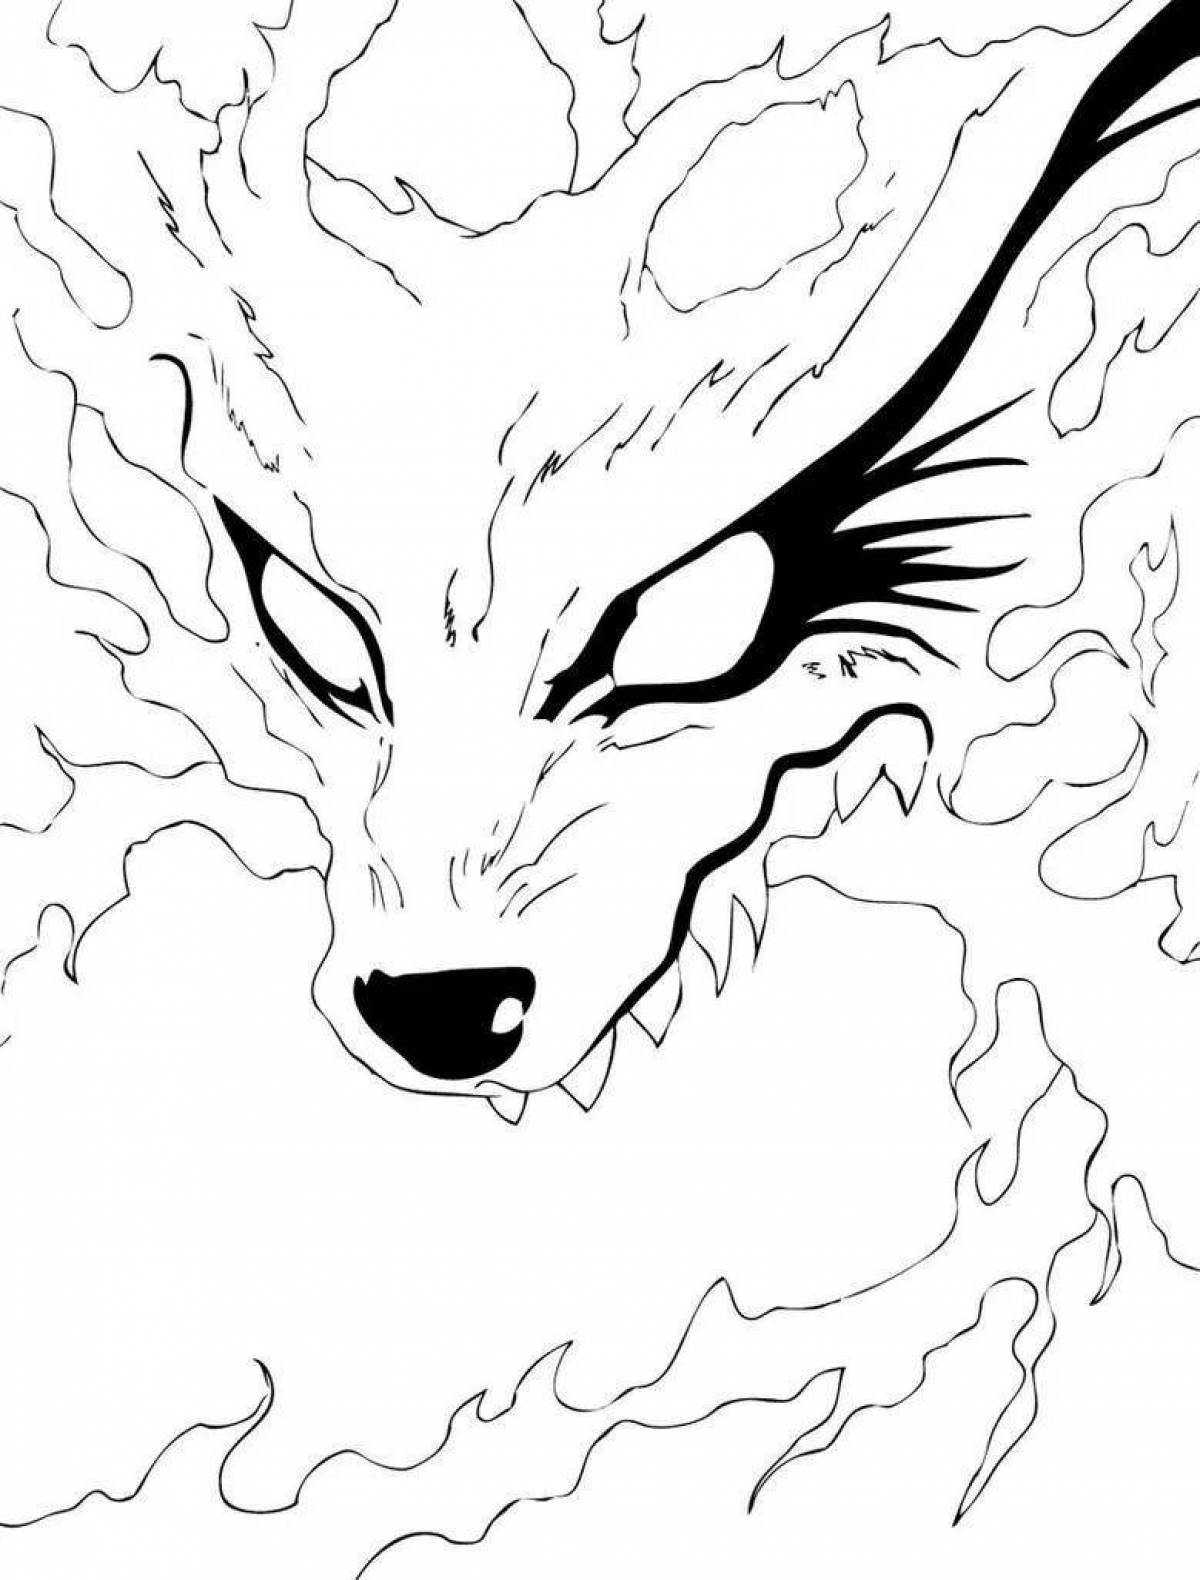 Coloring elegant 9-tailed fox